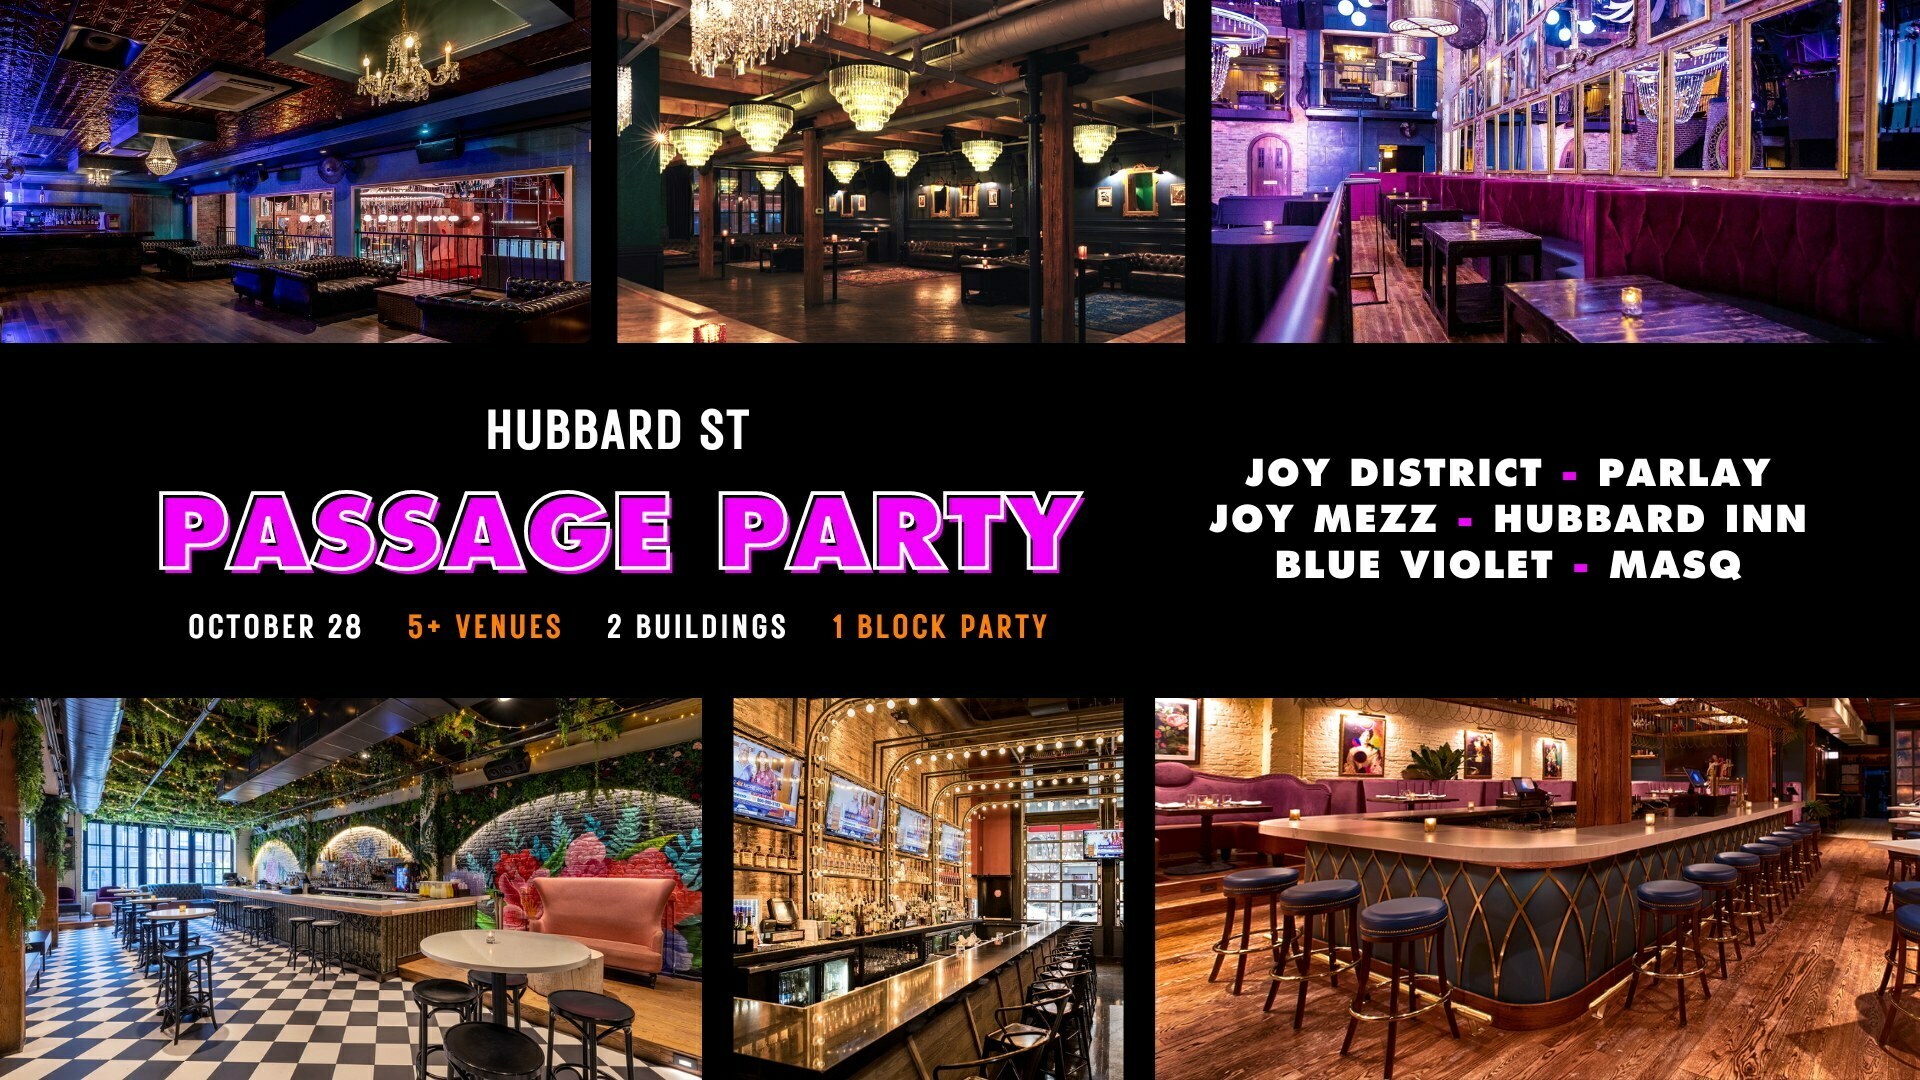 The Hubbard St. HALLOWEEN "Passage Party", Chicago, Illinois, United States